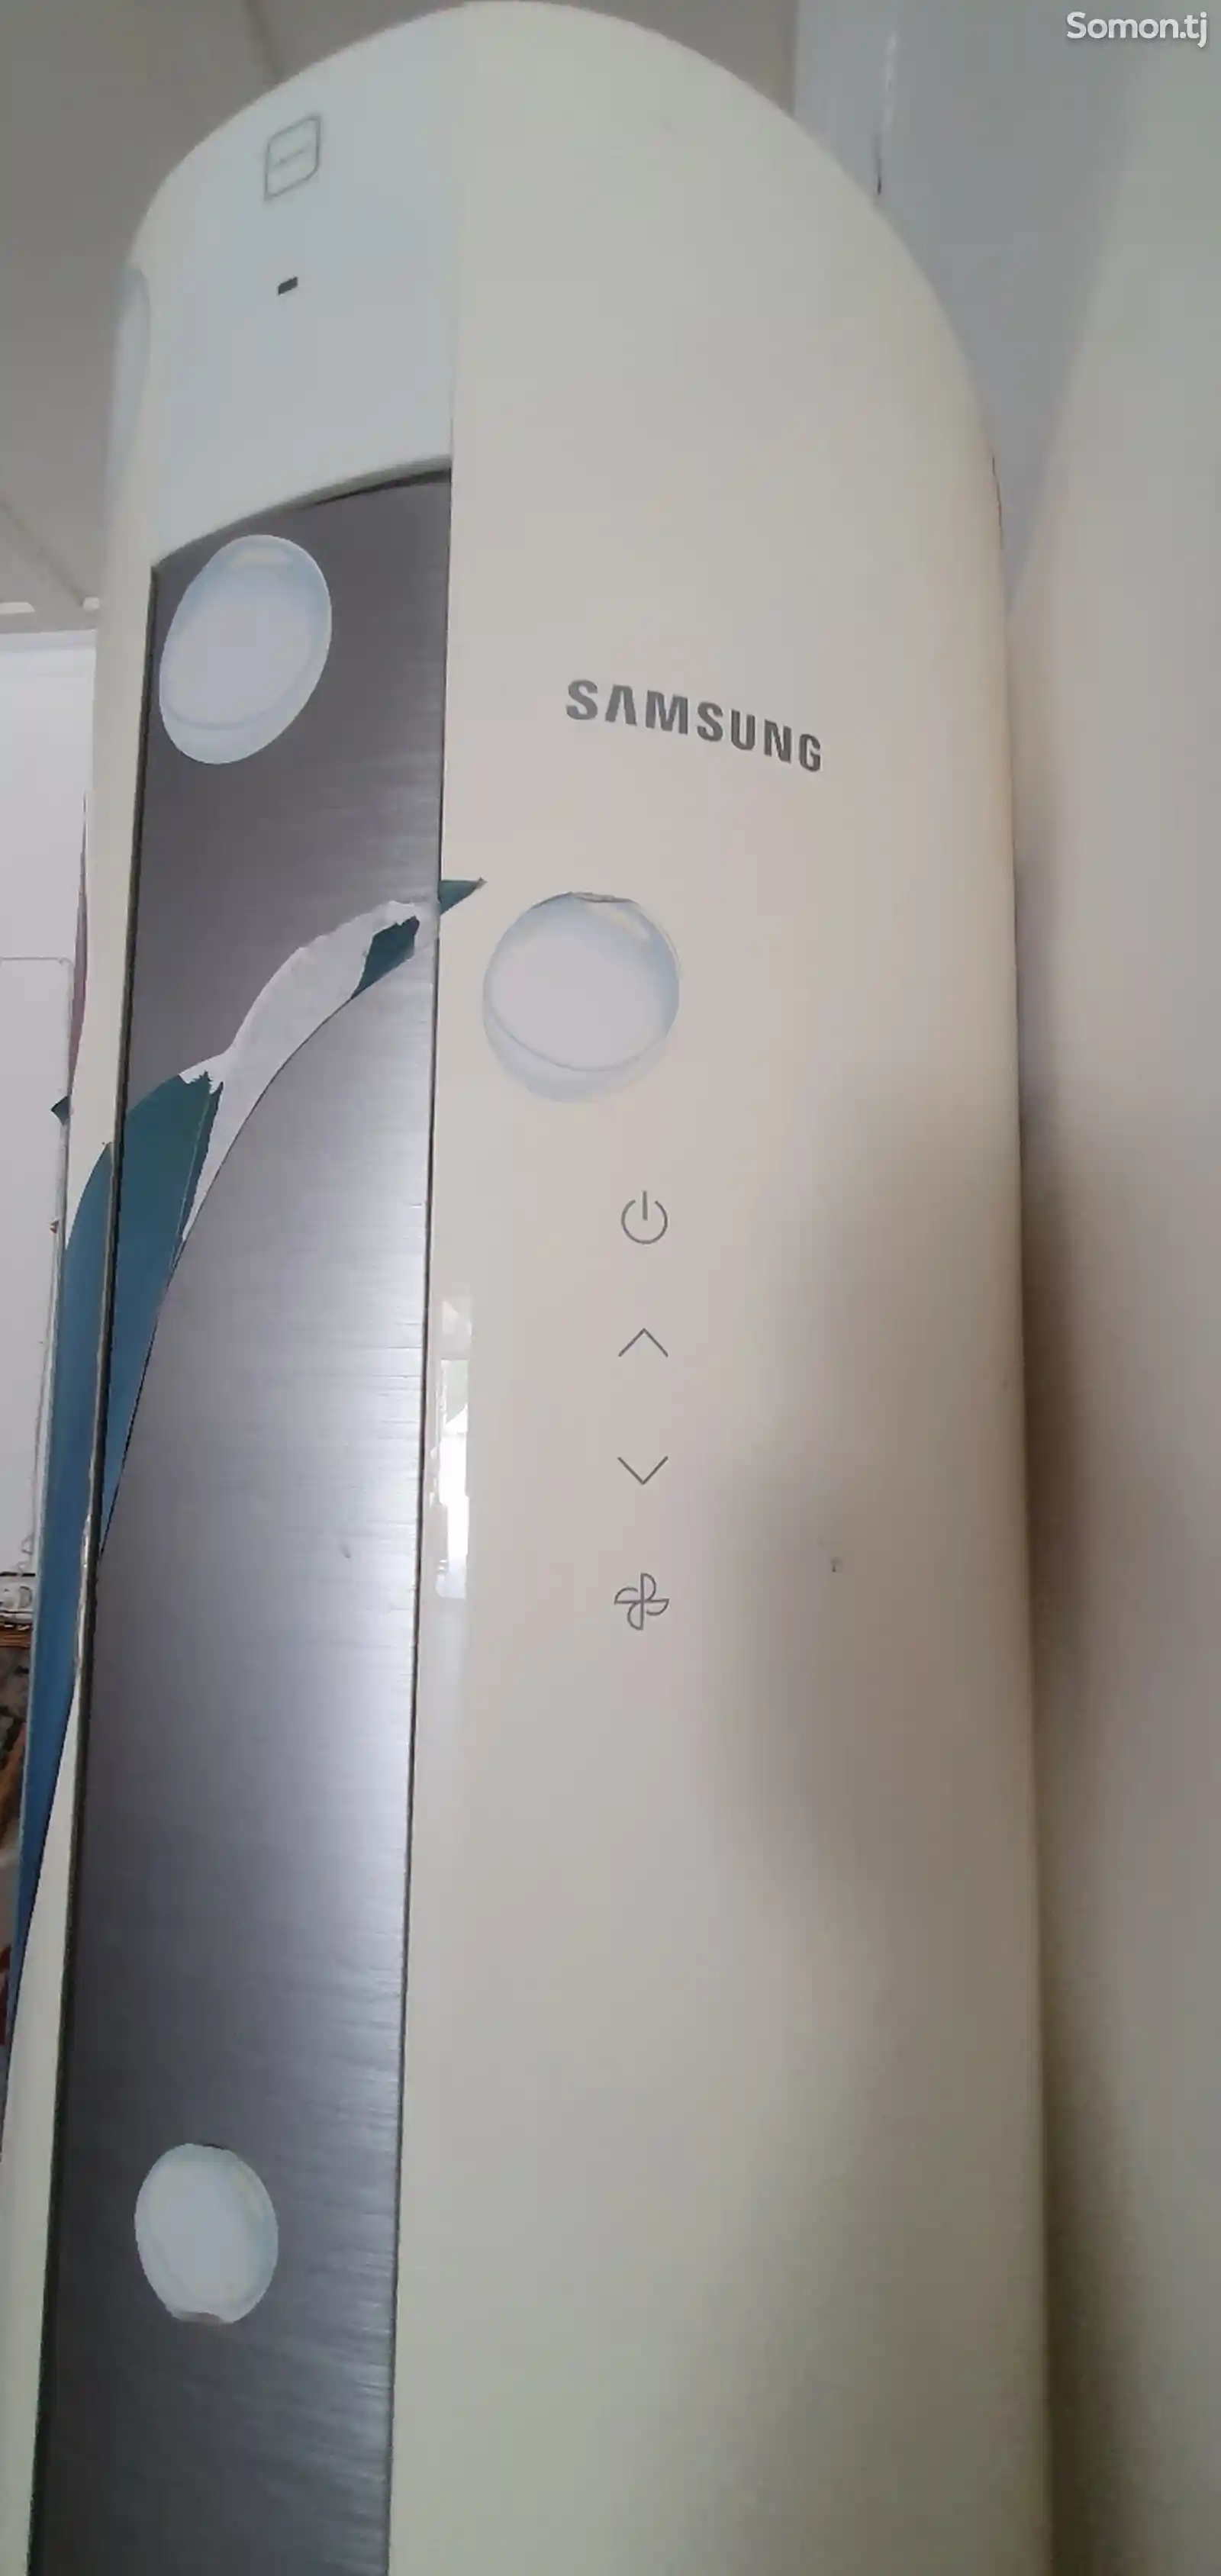 Кондиционер Samsung-4